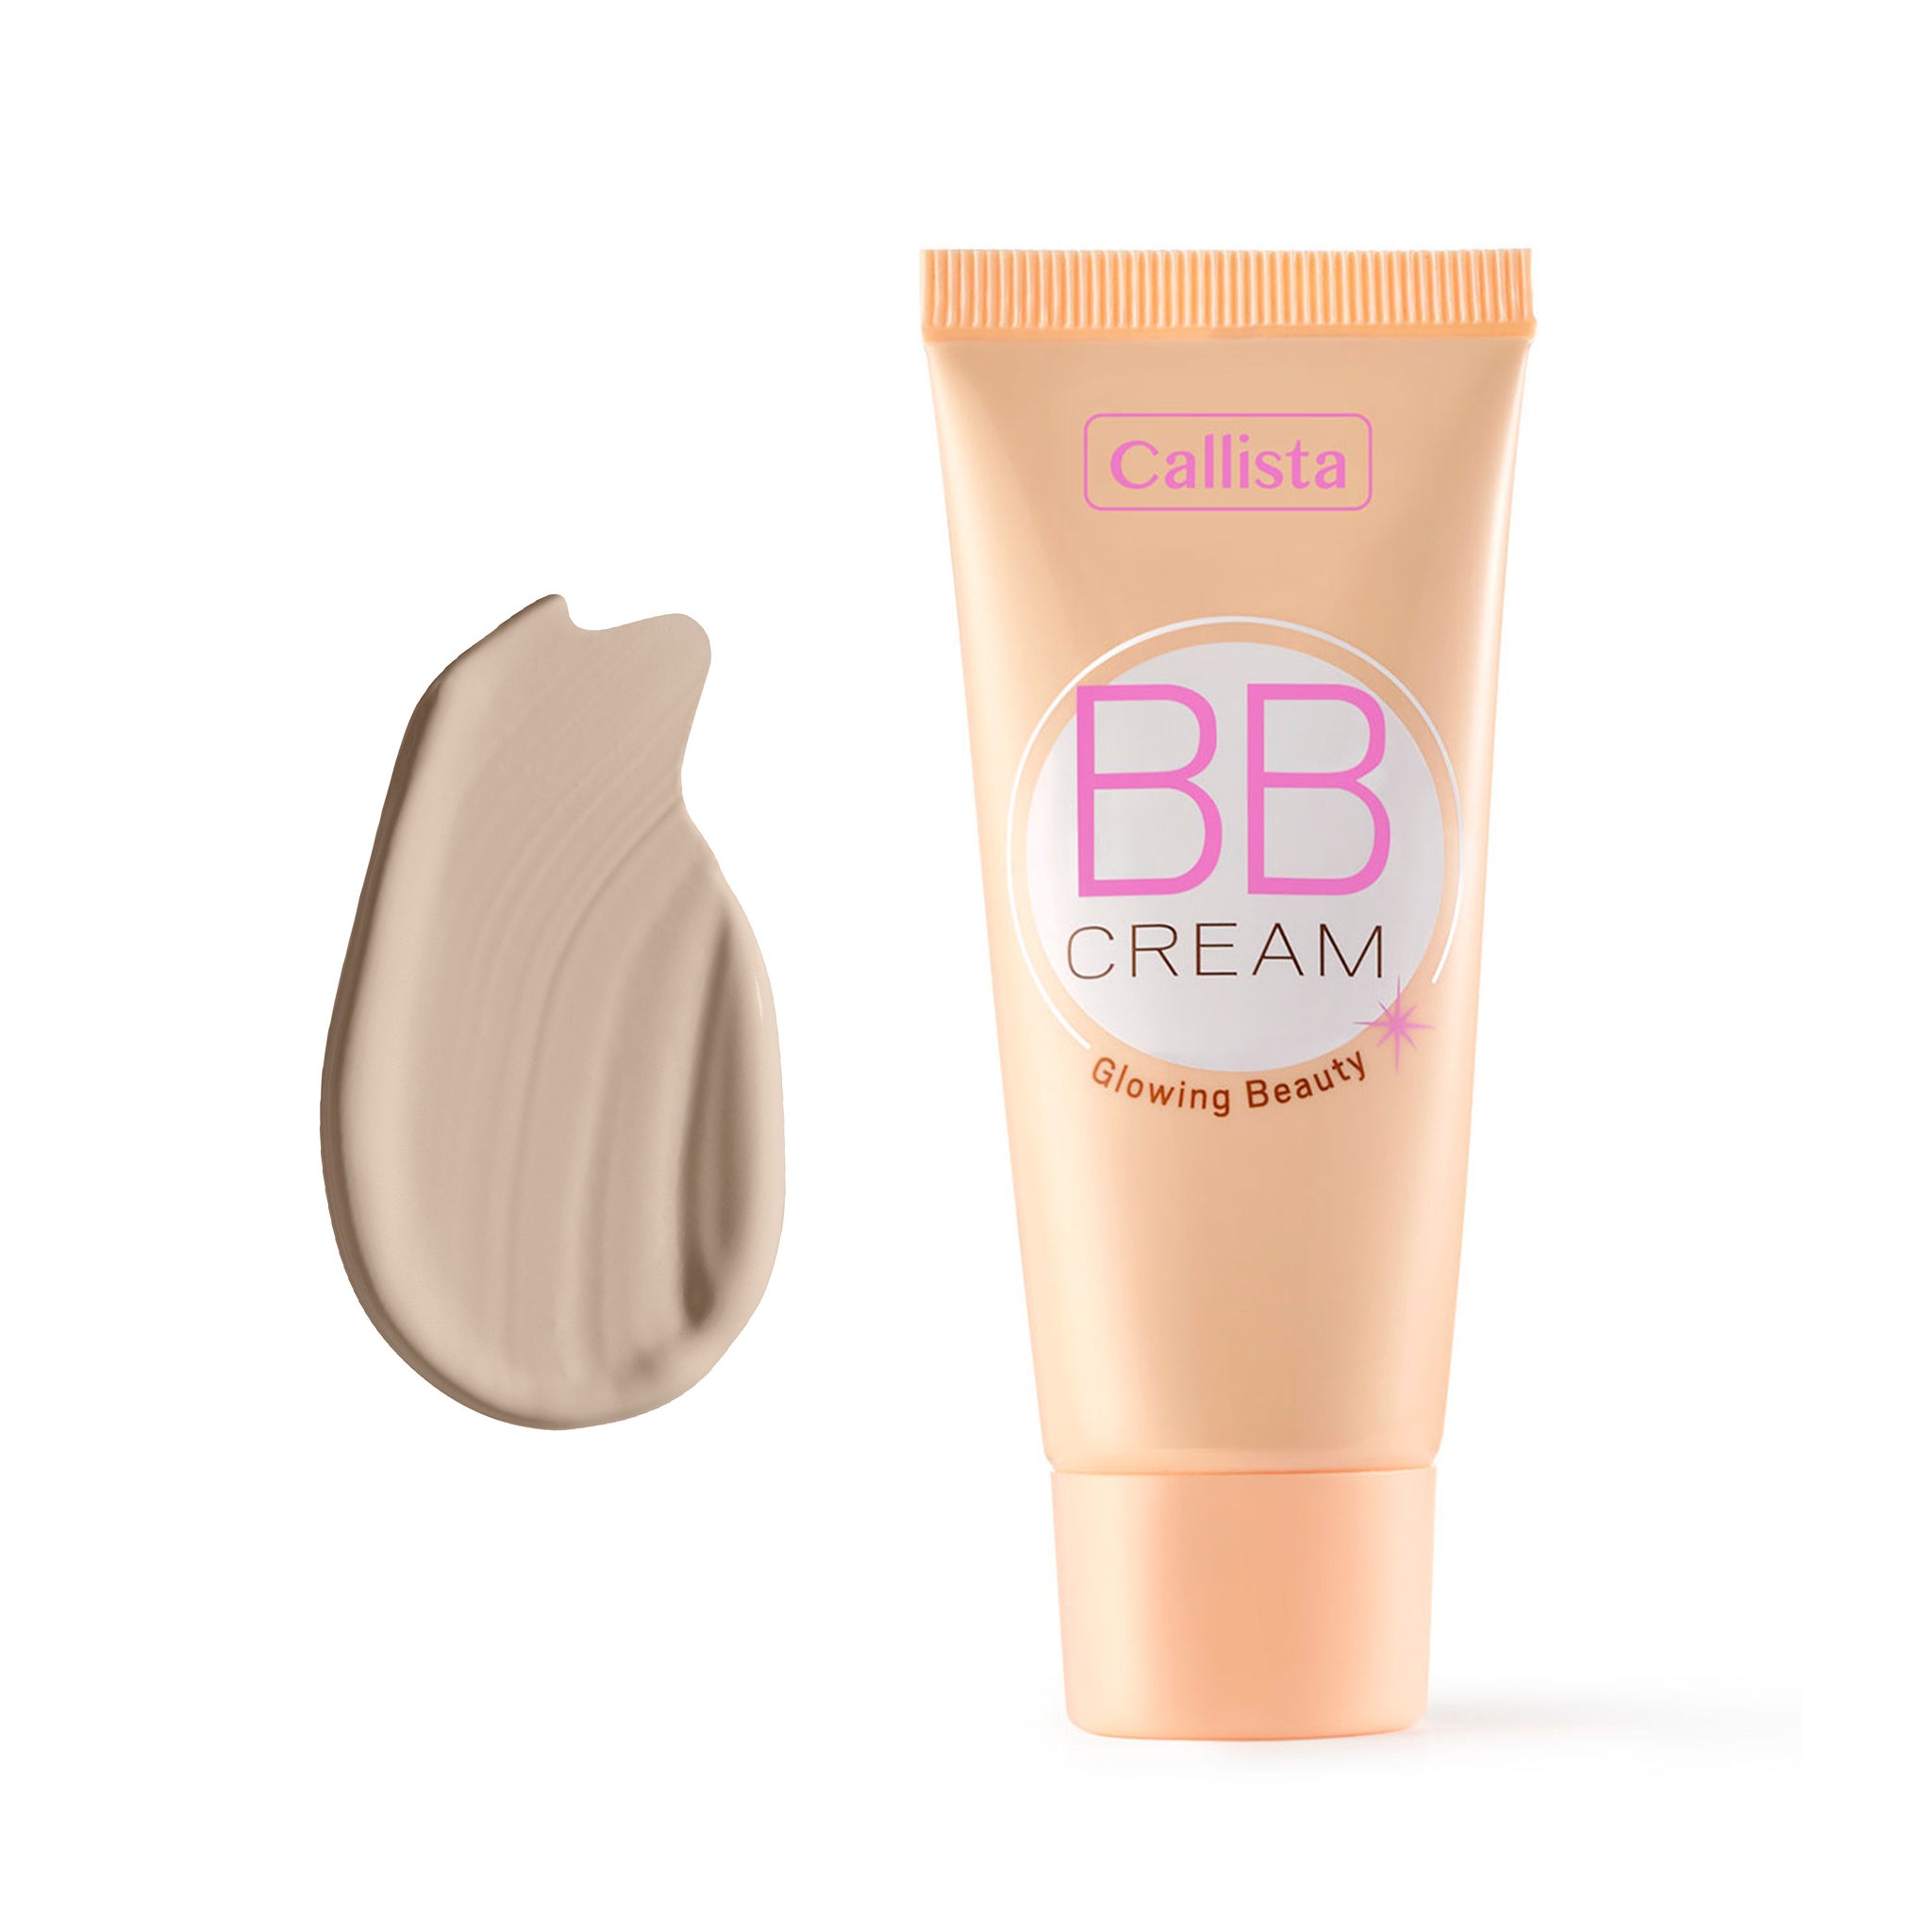 BB Cream Glowing Beauty 25ml 110